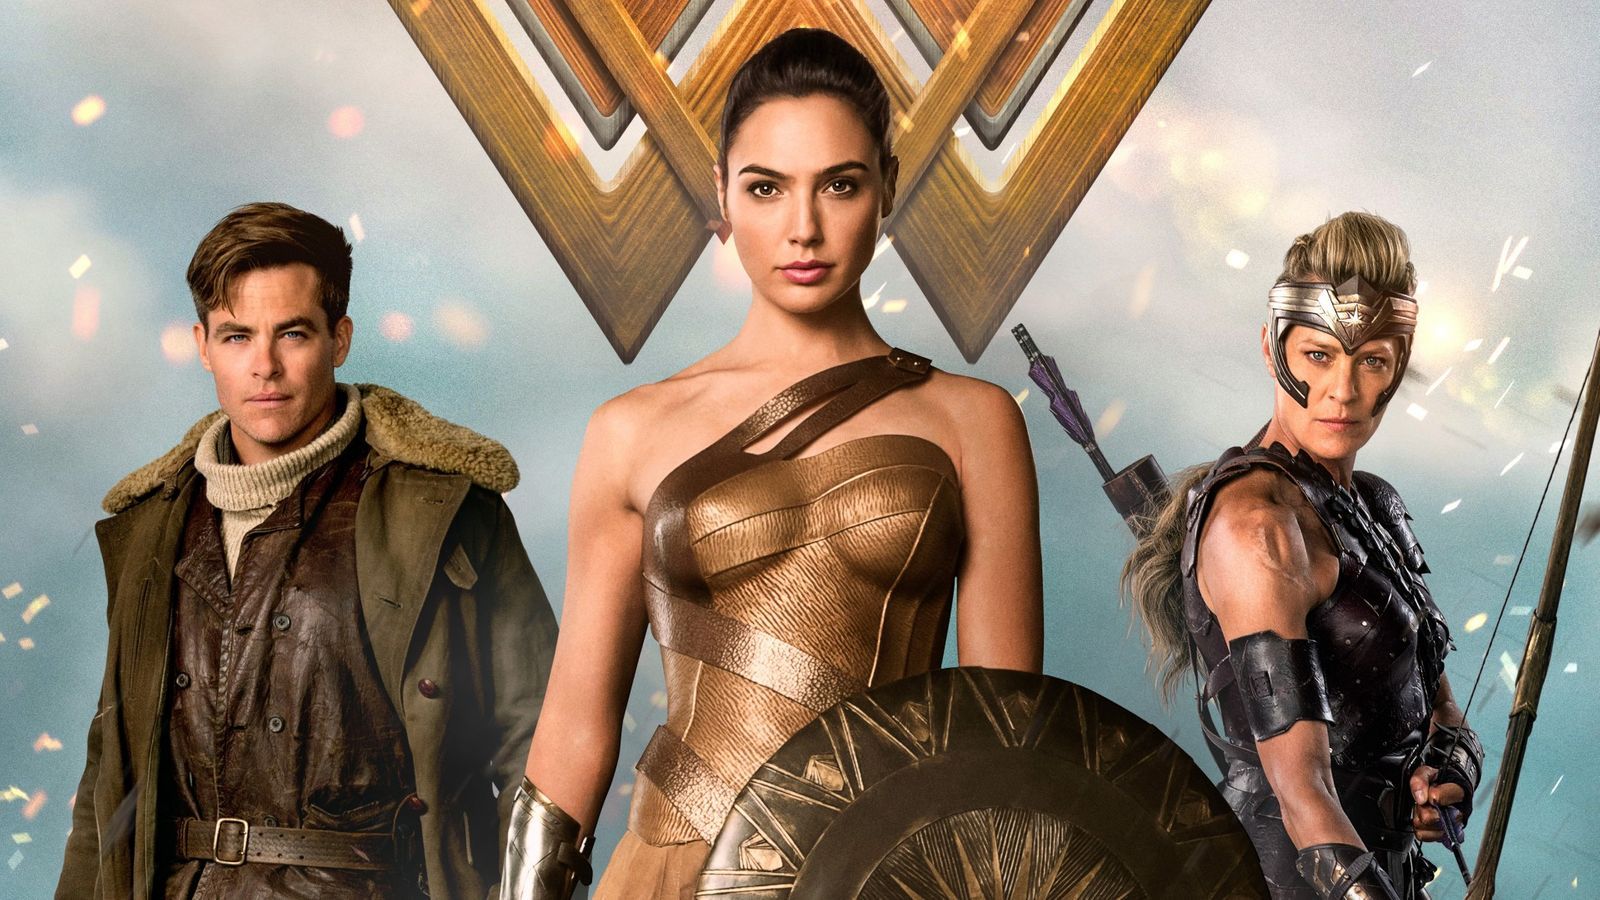 Gal Gadot in Wonder Woman Movie Poster Wallpaper